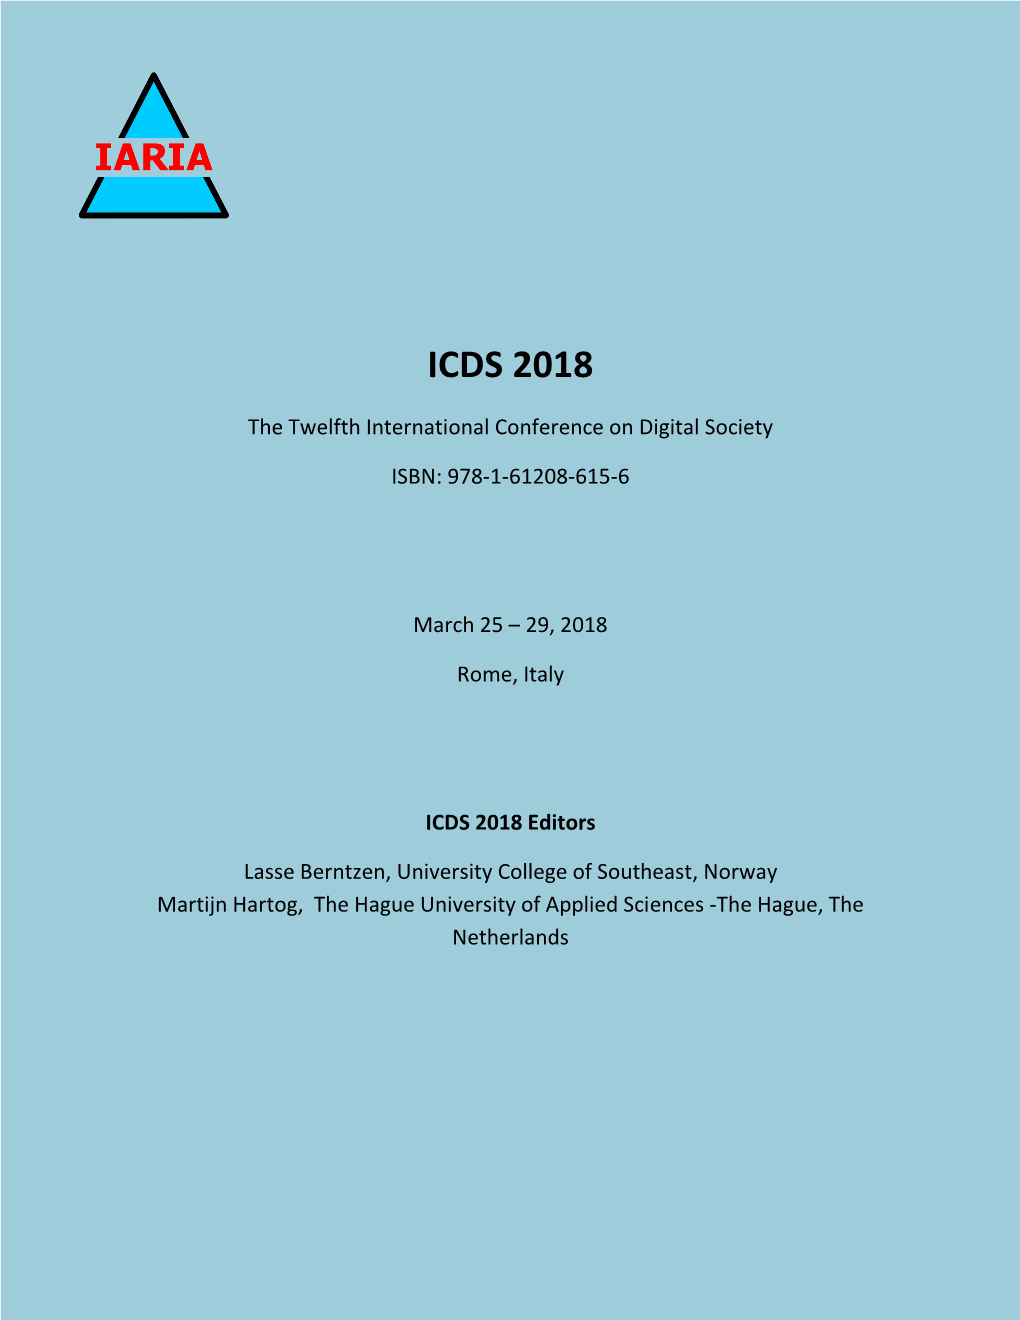 ICDS 2018 Full Proceedings